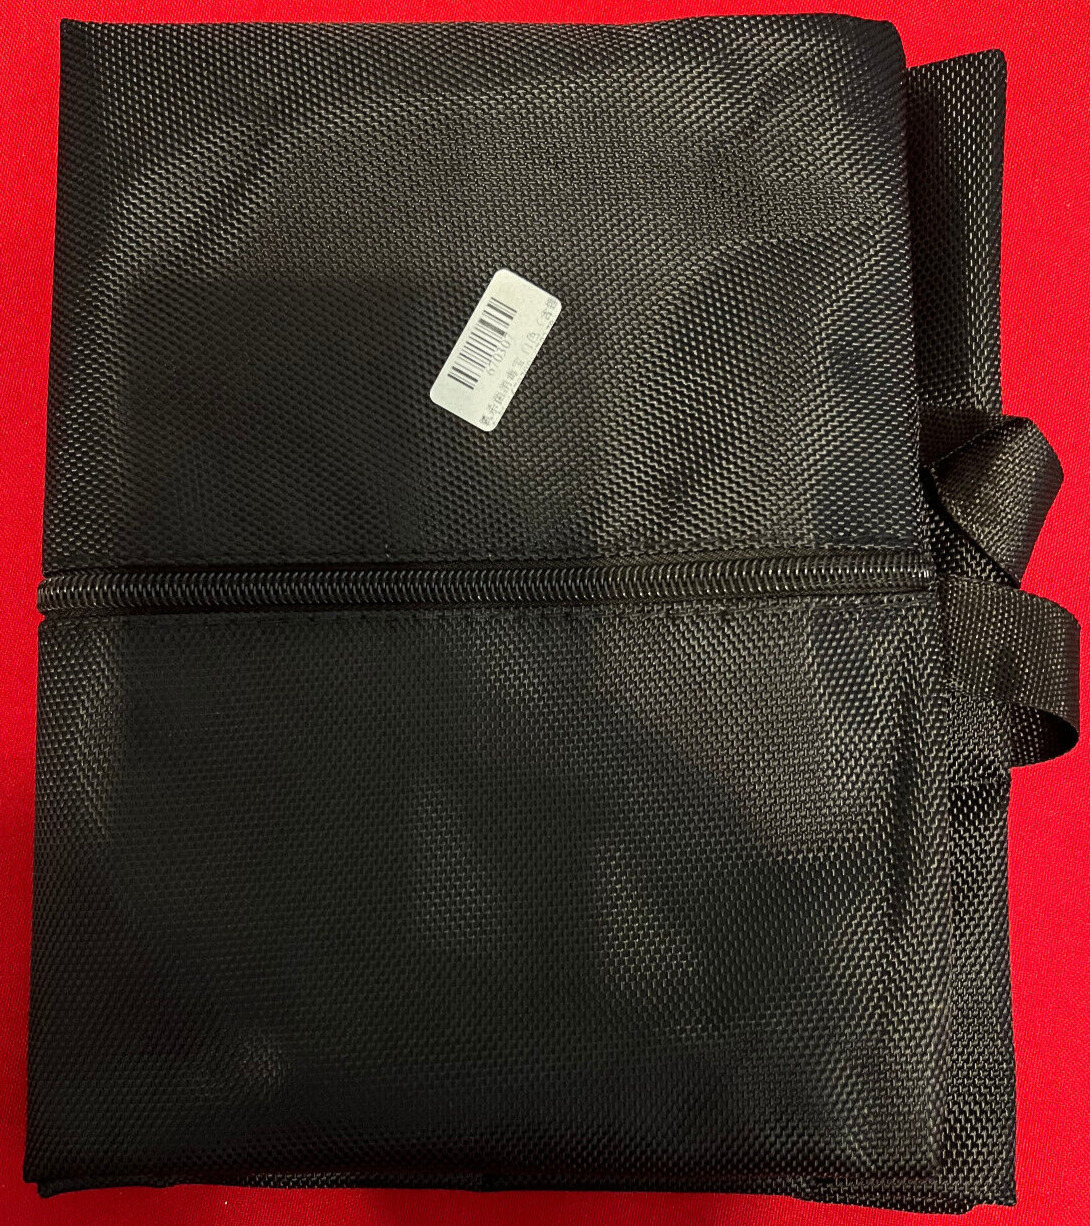 Cpap Accessory Travel Bag - Black - 8"w X 14"l X 5"h